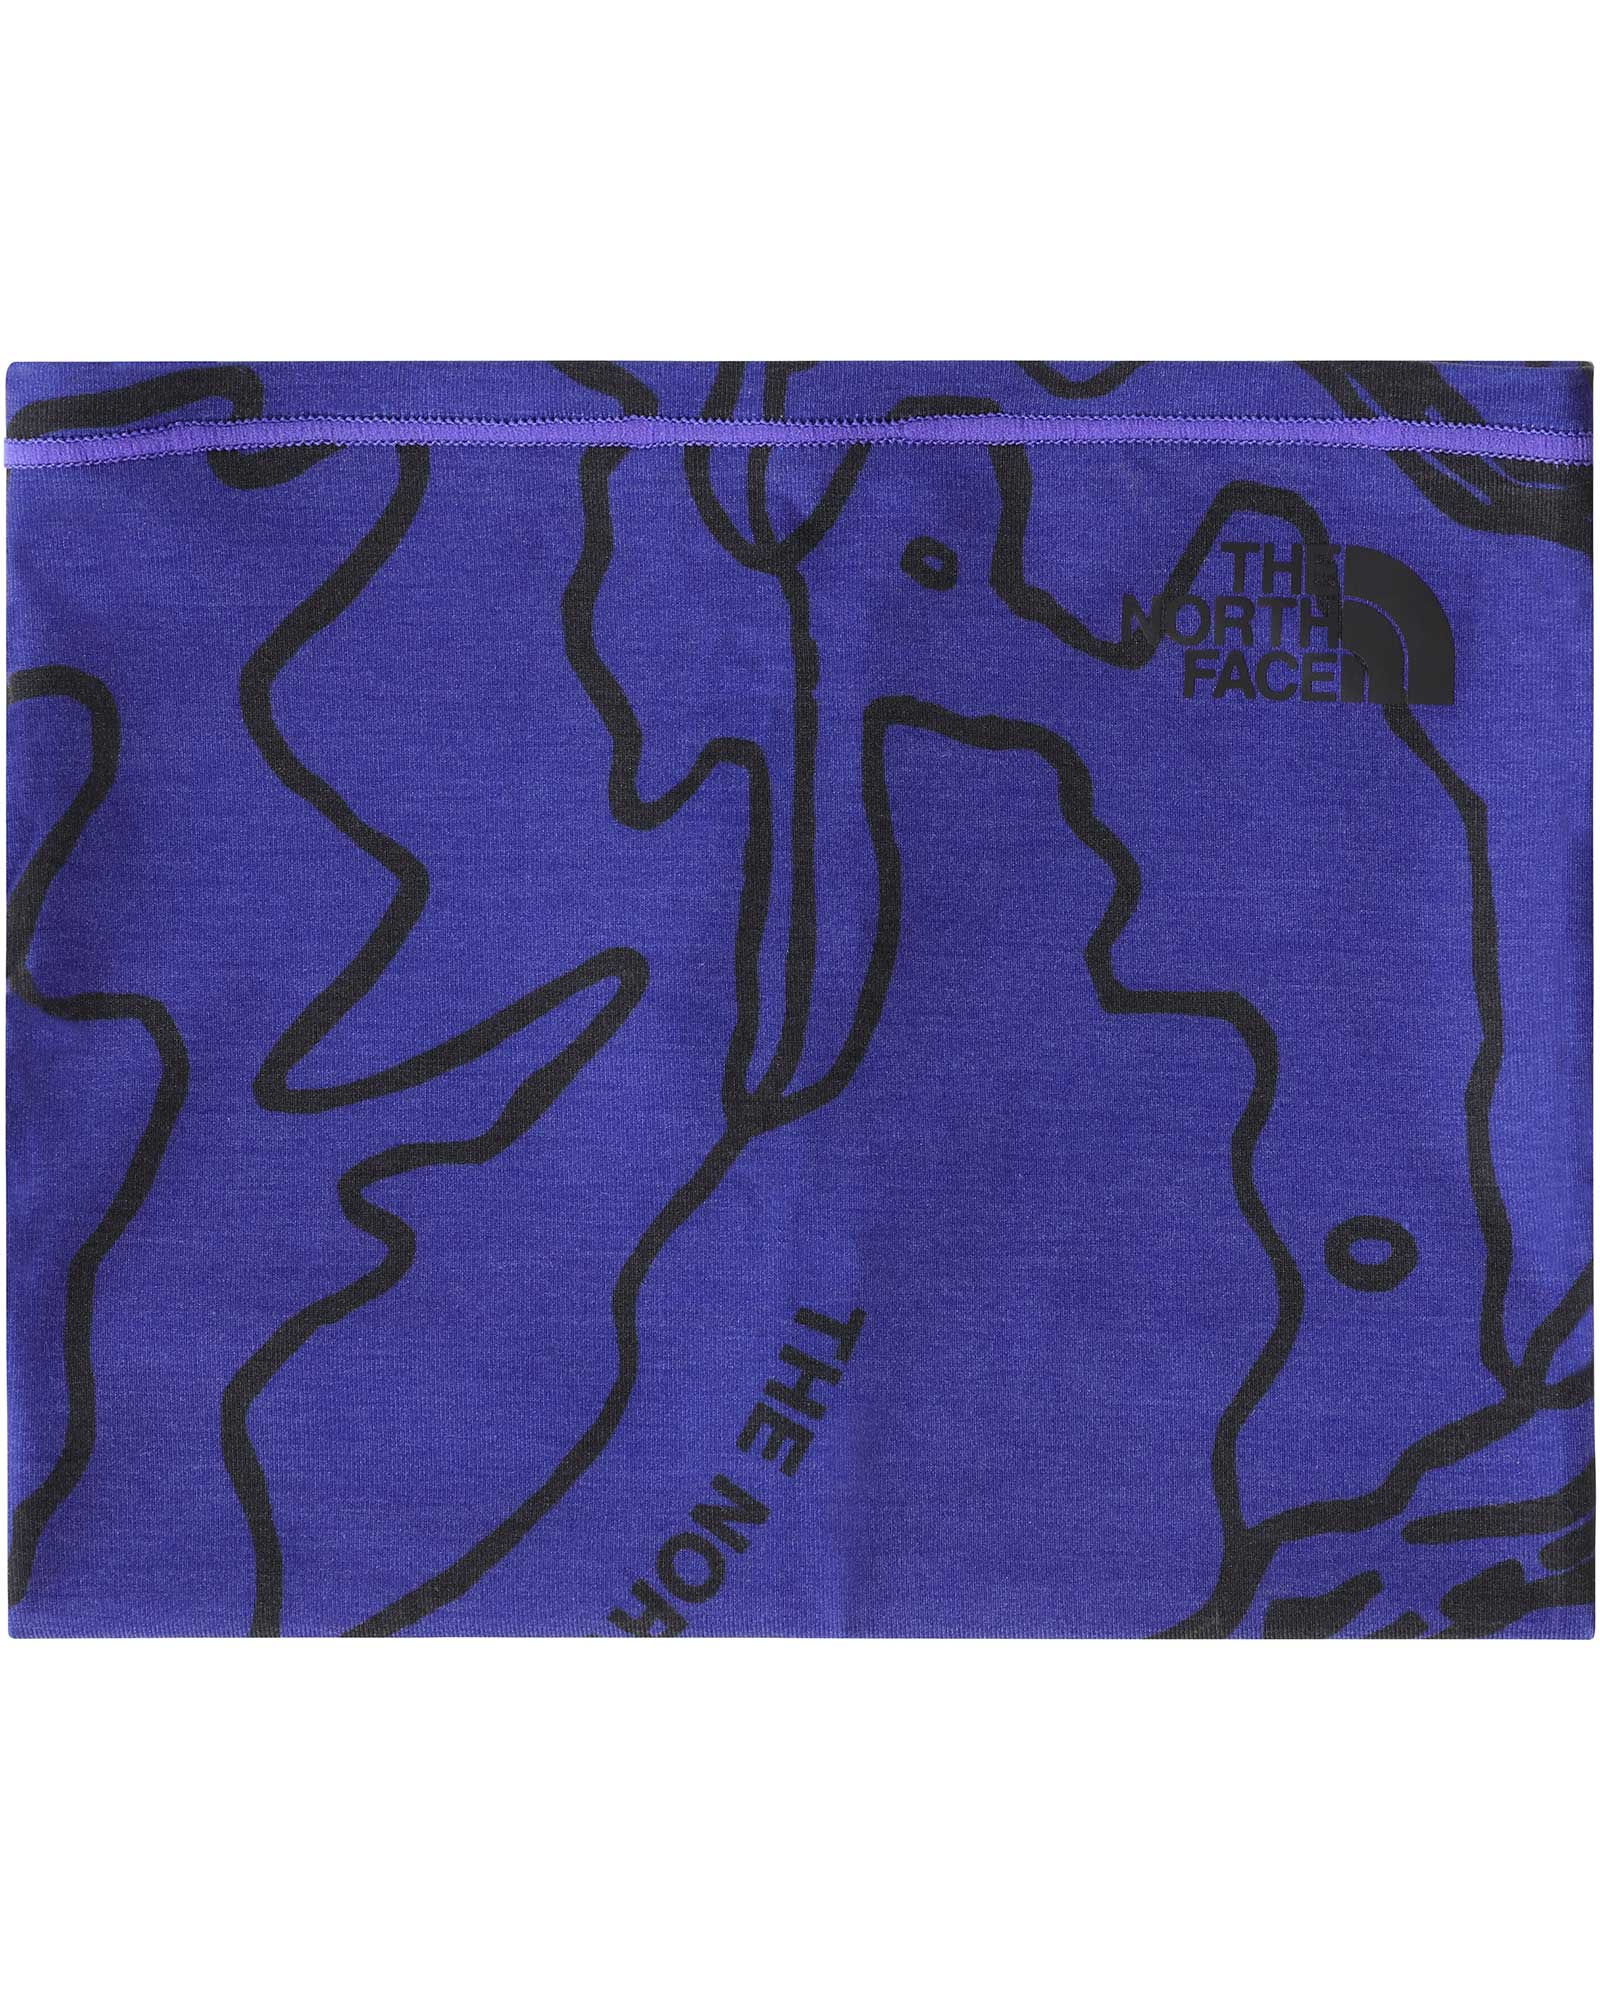 The North Face Dipsea Cover It 2.0 Neck Warmer - Lapis Blue Topo Print